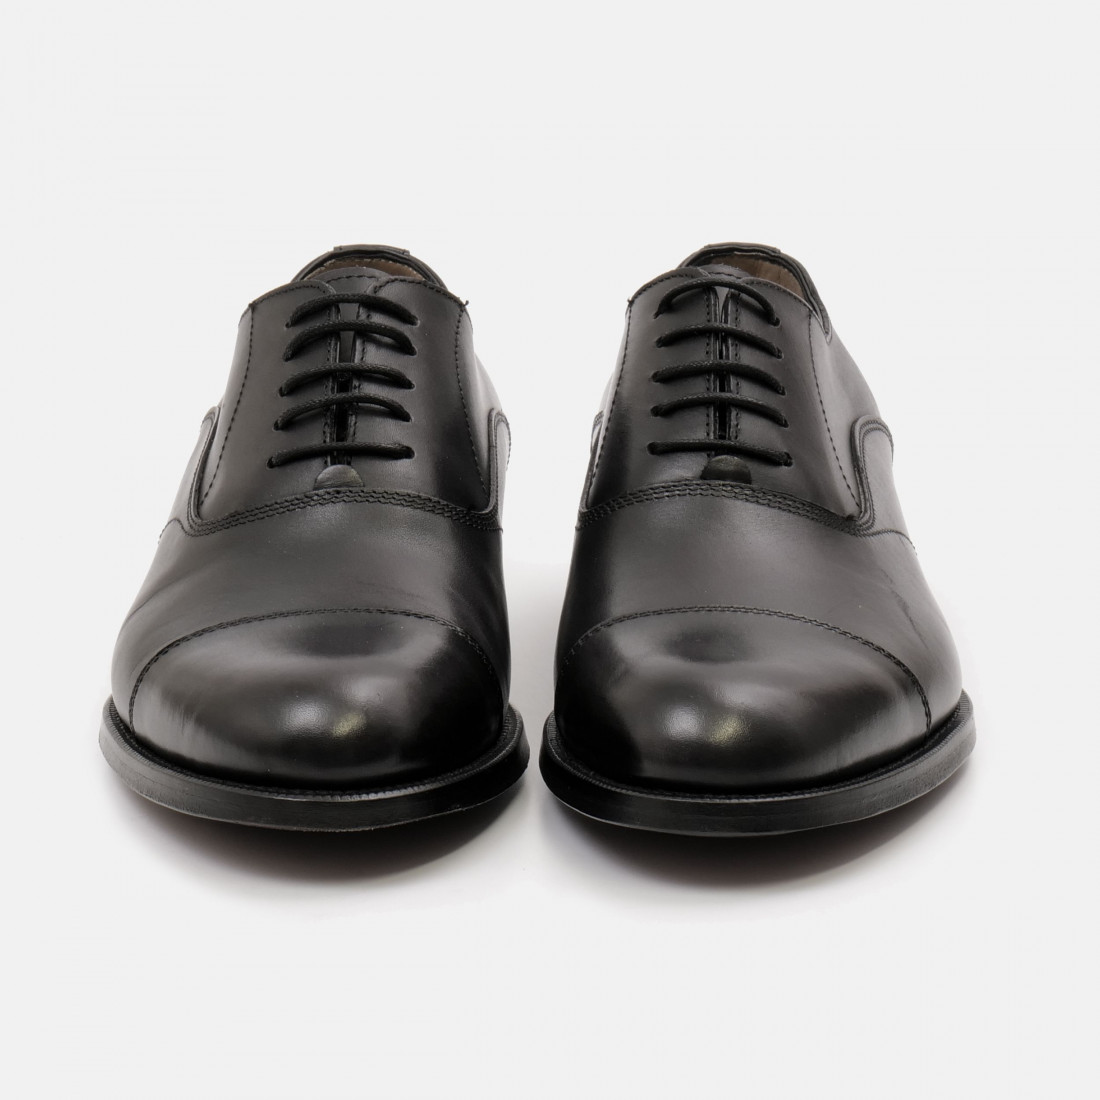 Calpierre men's oxford shoe in black leather